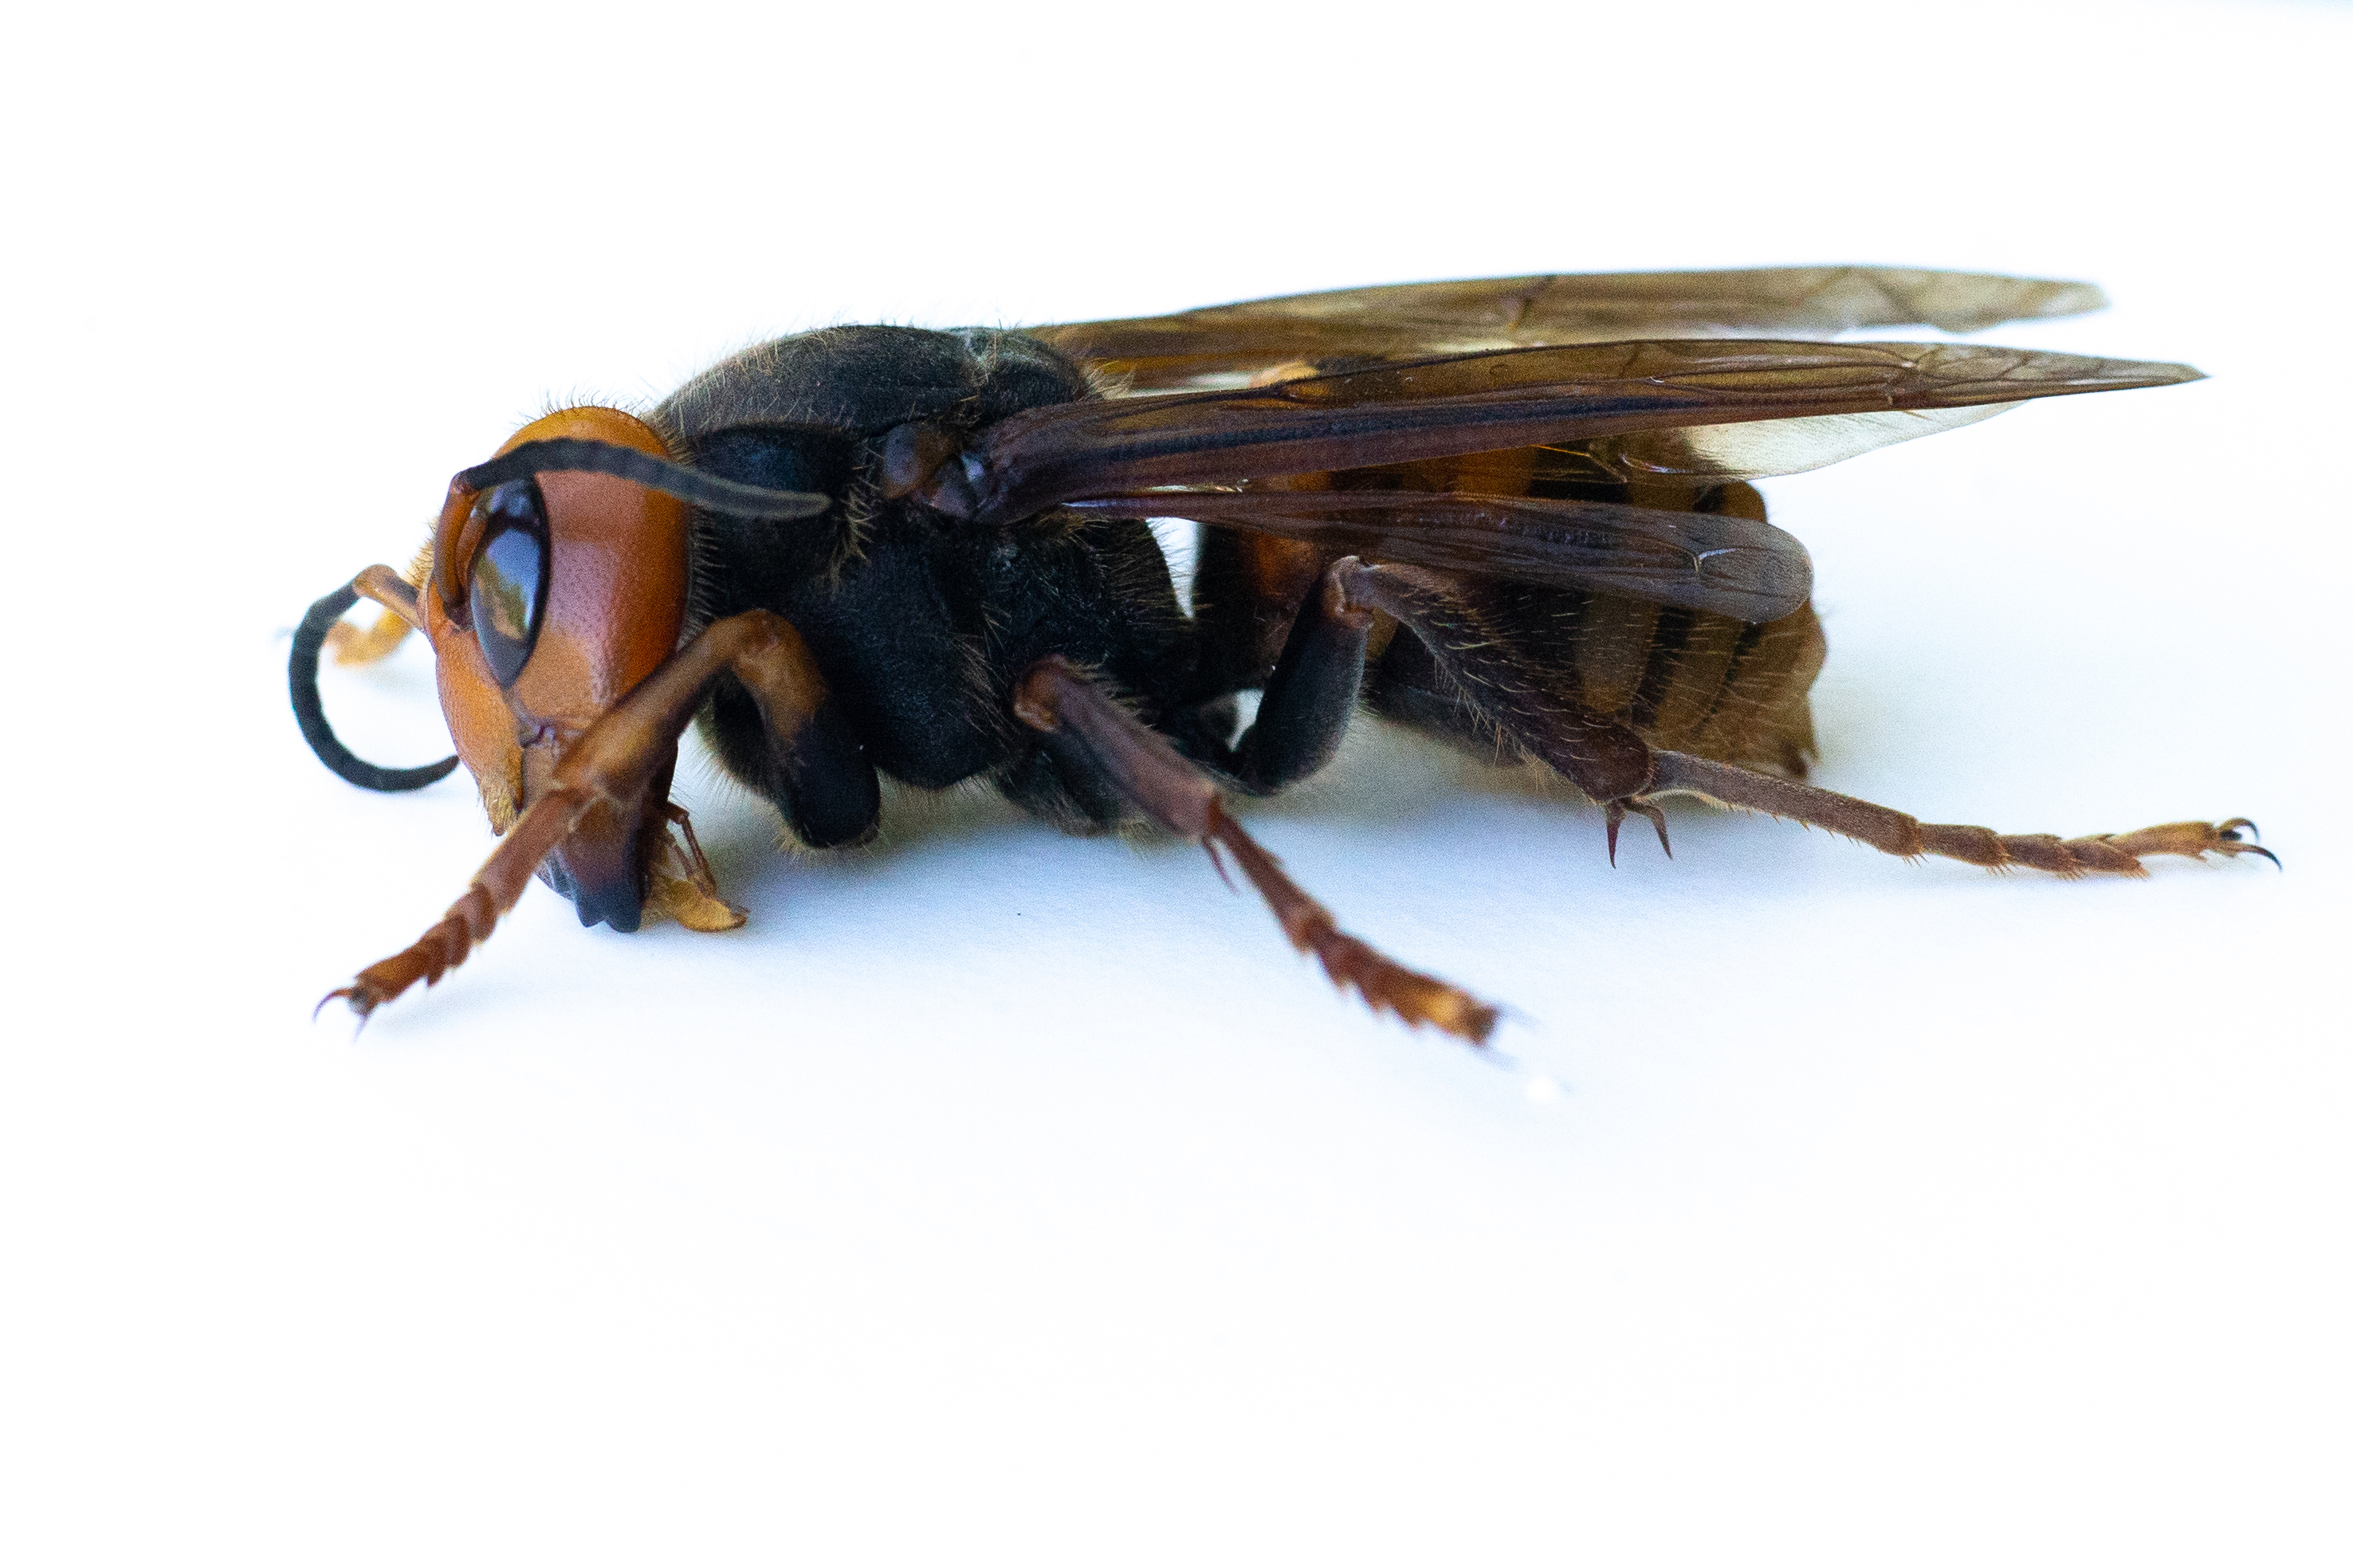 Insect wars: murder hornets v the American honeybee